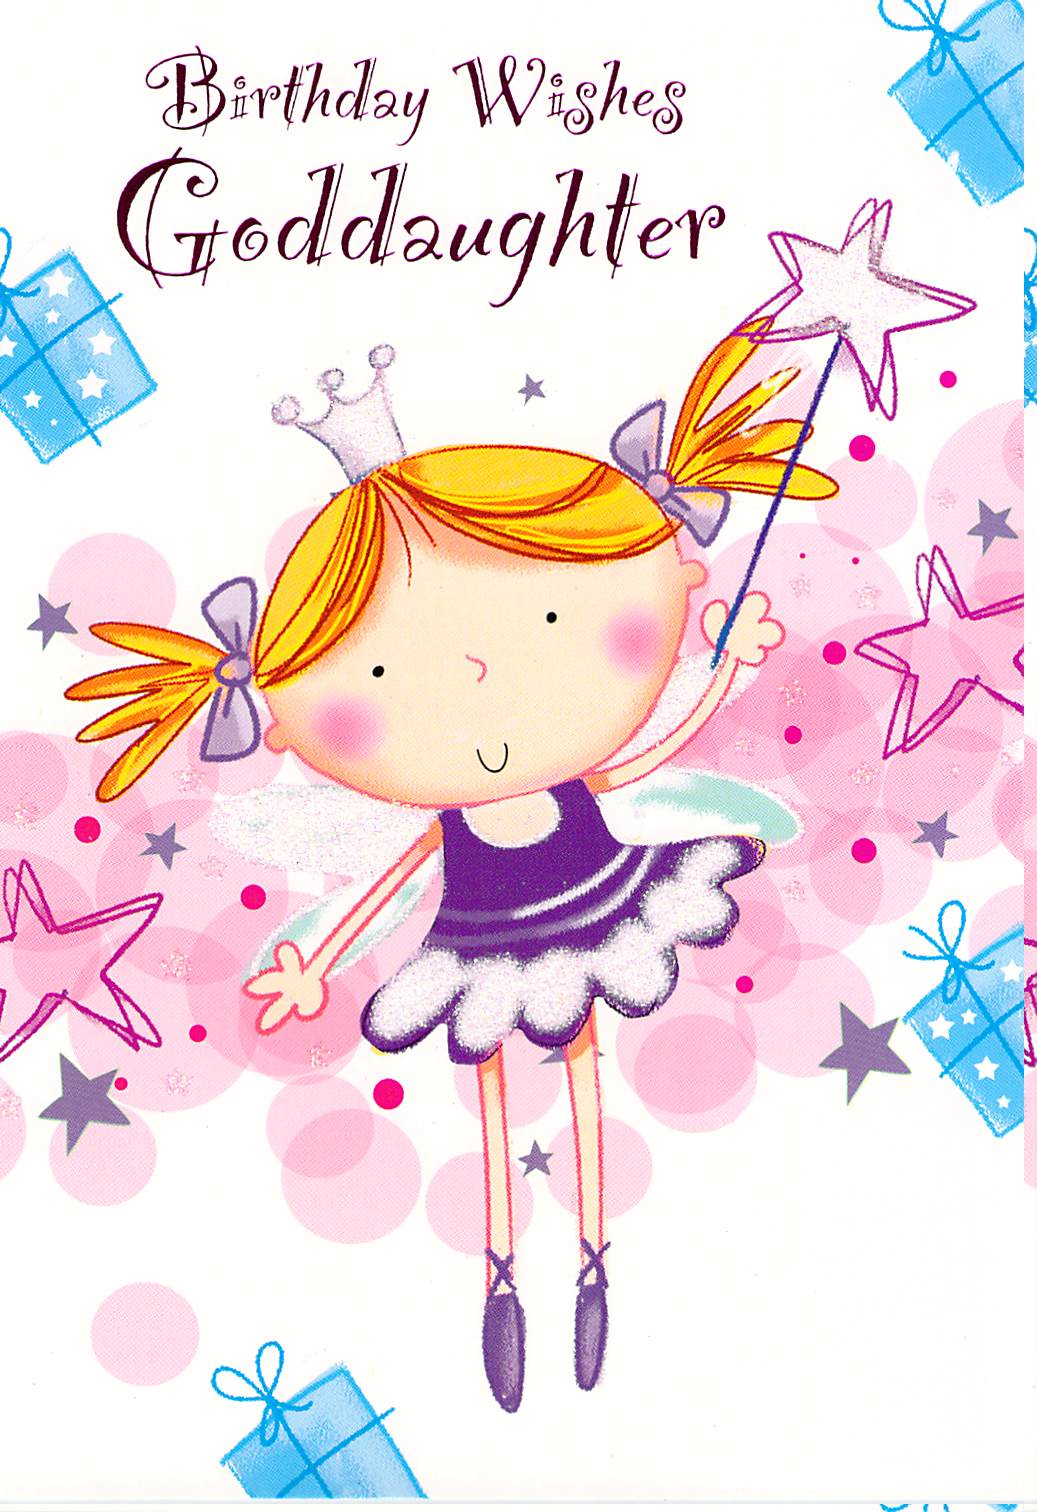 Goddaughter Birthday - Fairy -  Greeting Card - Multi Buy Discount